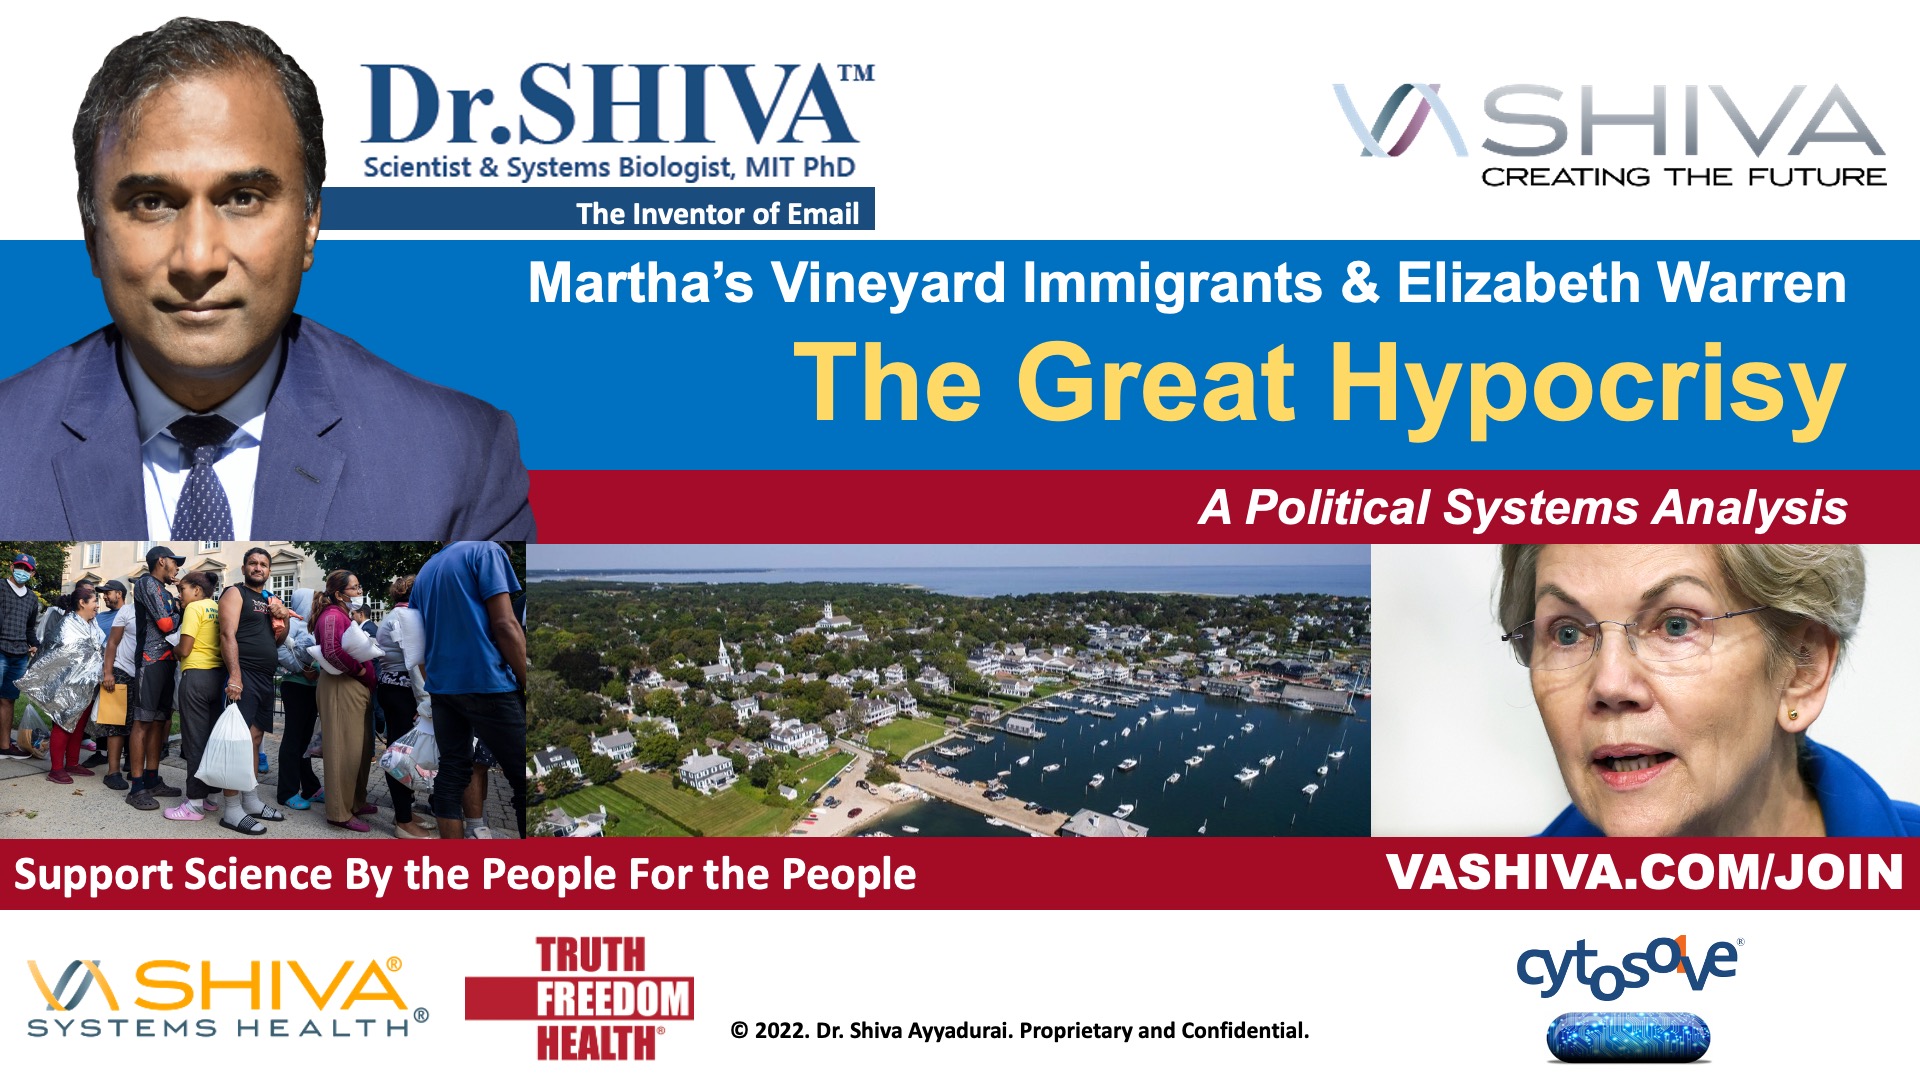 Dr.SHIVA LIVE: Martha’s Vineyard Immigrants & Elizabeth Warren - The Great Hypocrisy